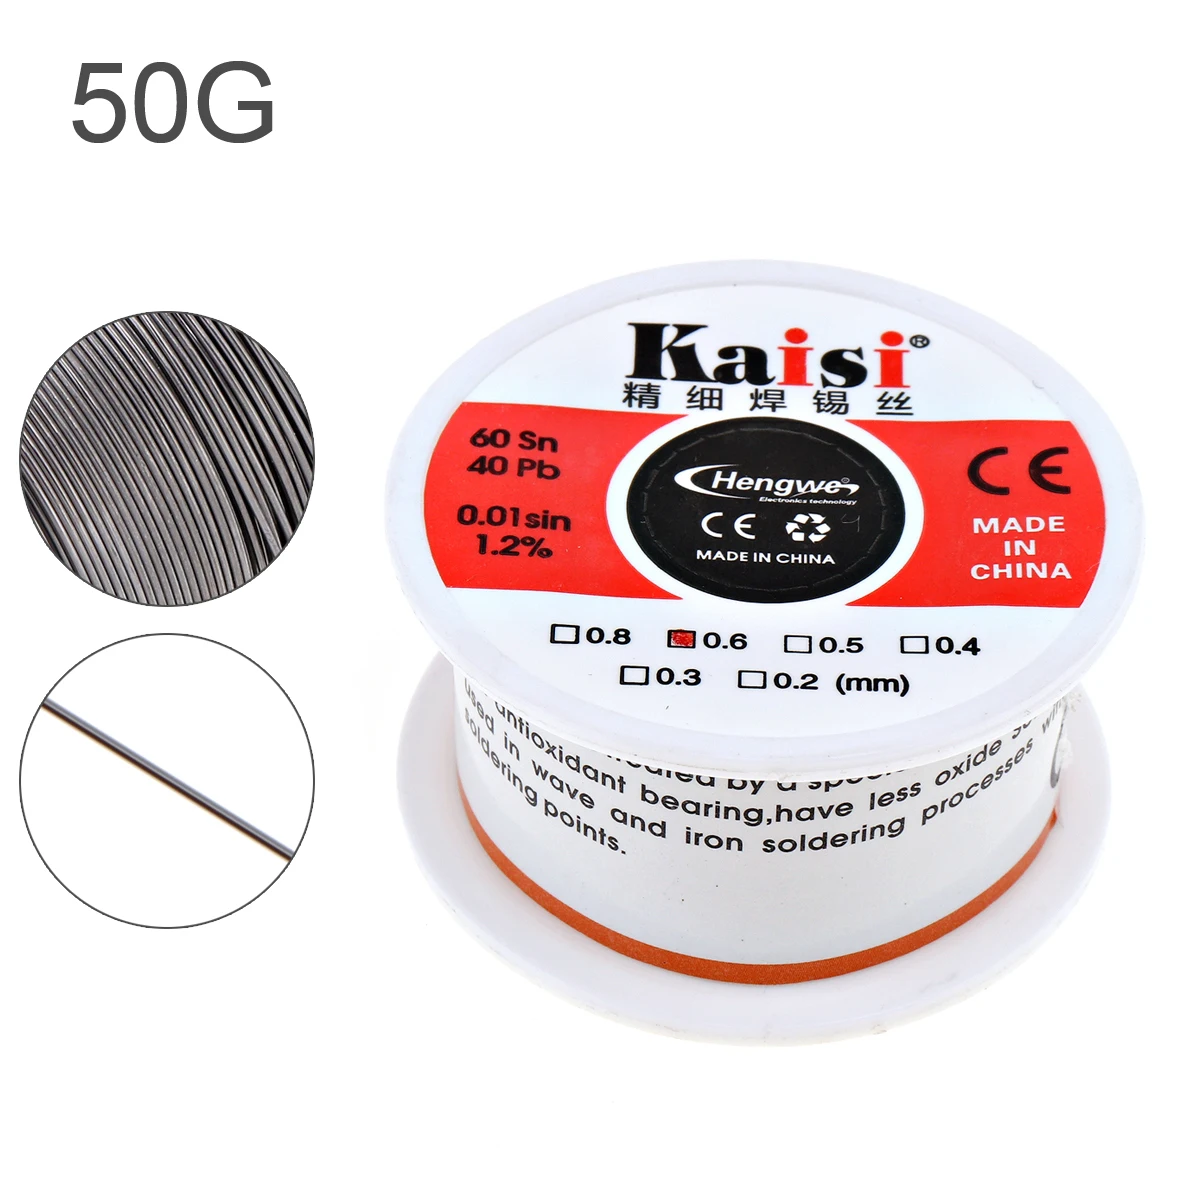 

50g Flux 1.2% Fine Wire Tin Solder Wire Sn60 Pb40 for Precise Welding Works 0.4mm 0.5mm 0.6mm Soldering Welding Wires